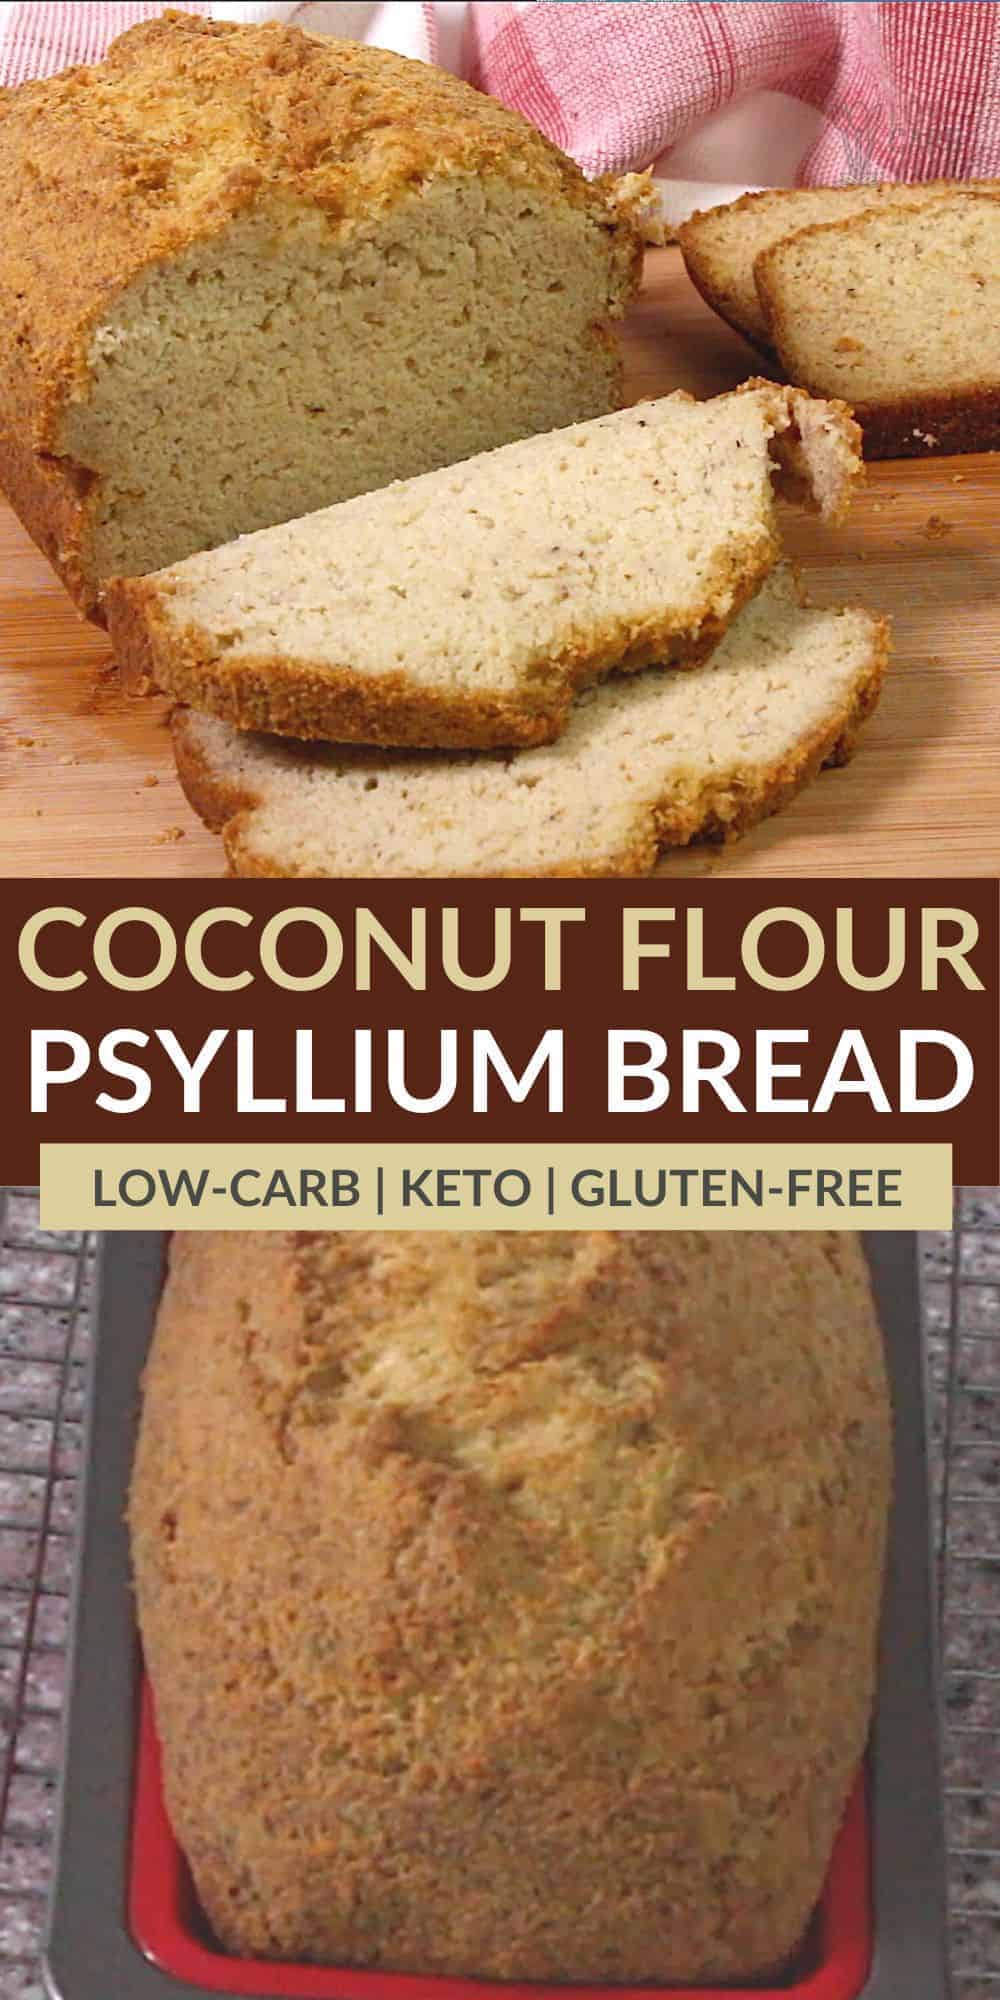 coconut flour psyllium bread pinterest image.